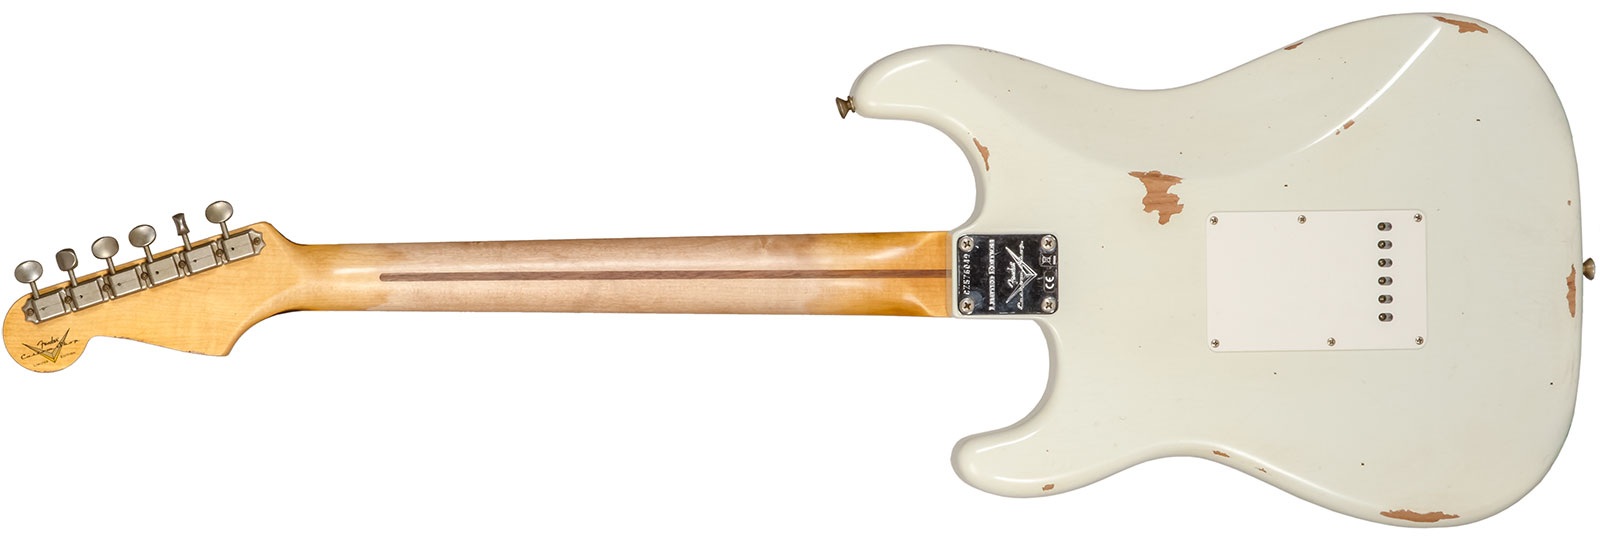 Fender Custom Shop Strat Fat 50's 3s Trem Mn #cz570495 - Relic India Ivory - Guitarra eléctrica con forma de str. - Variation 1